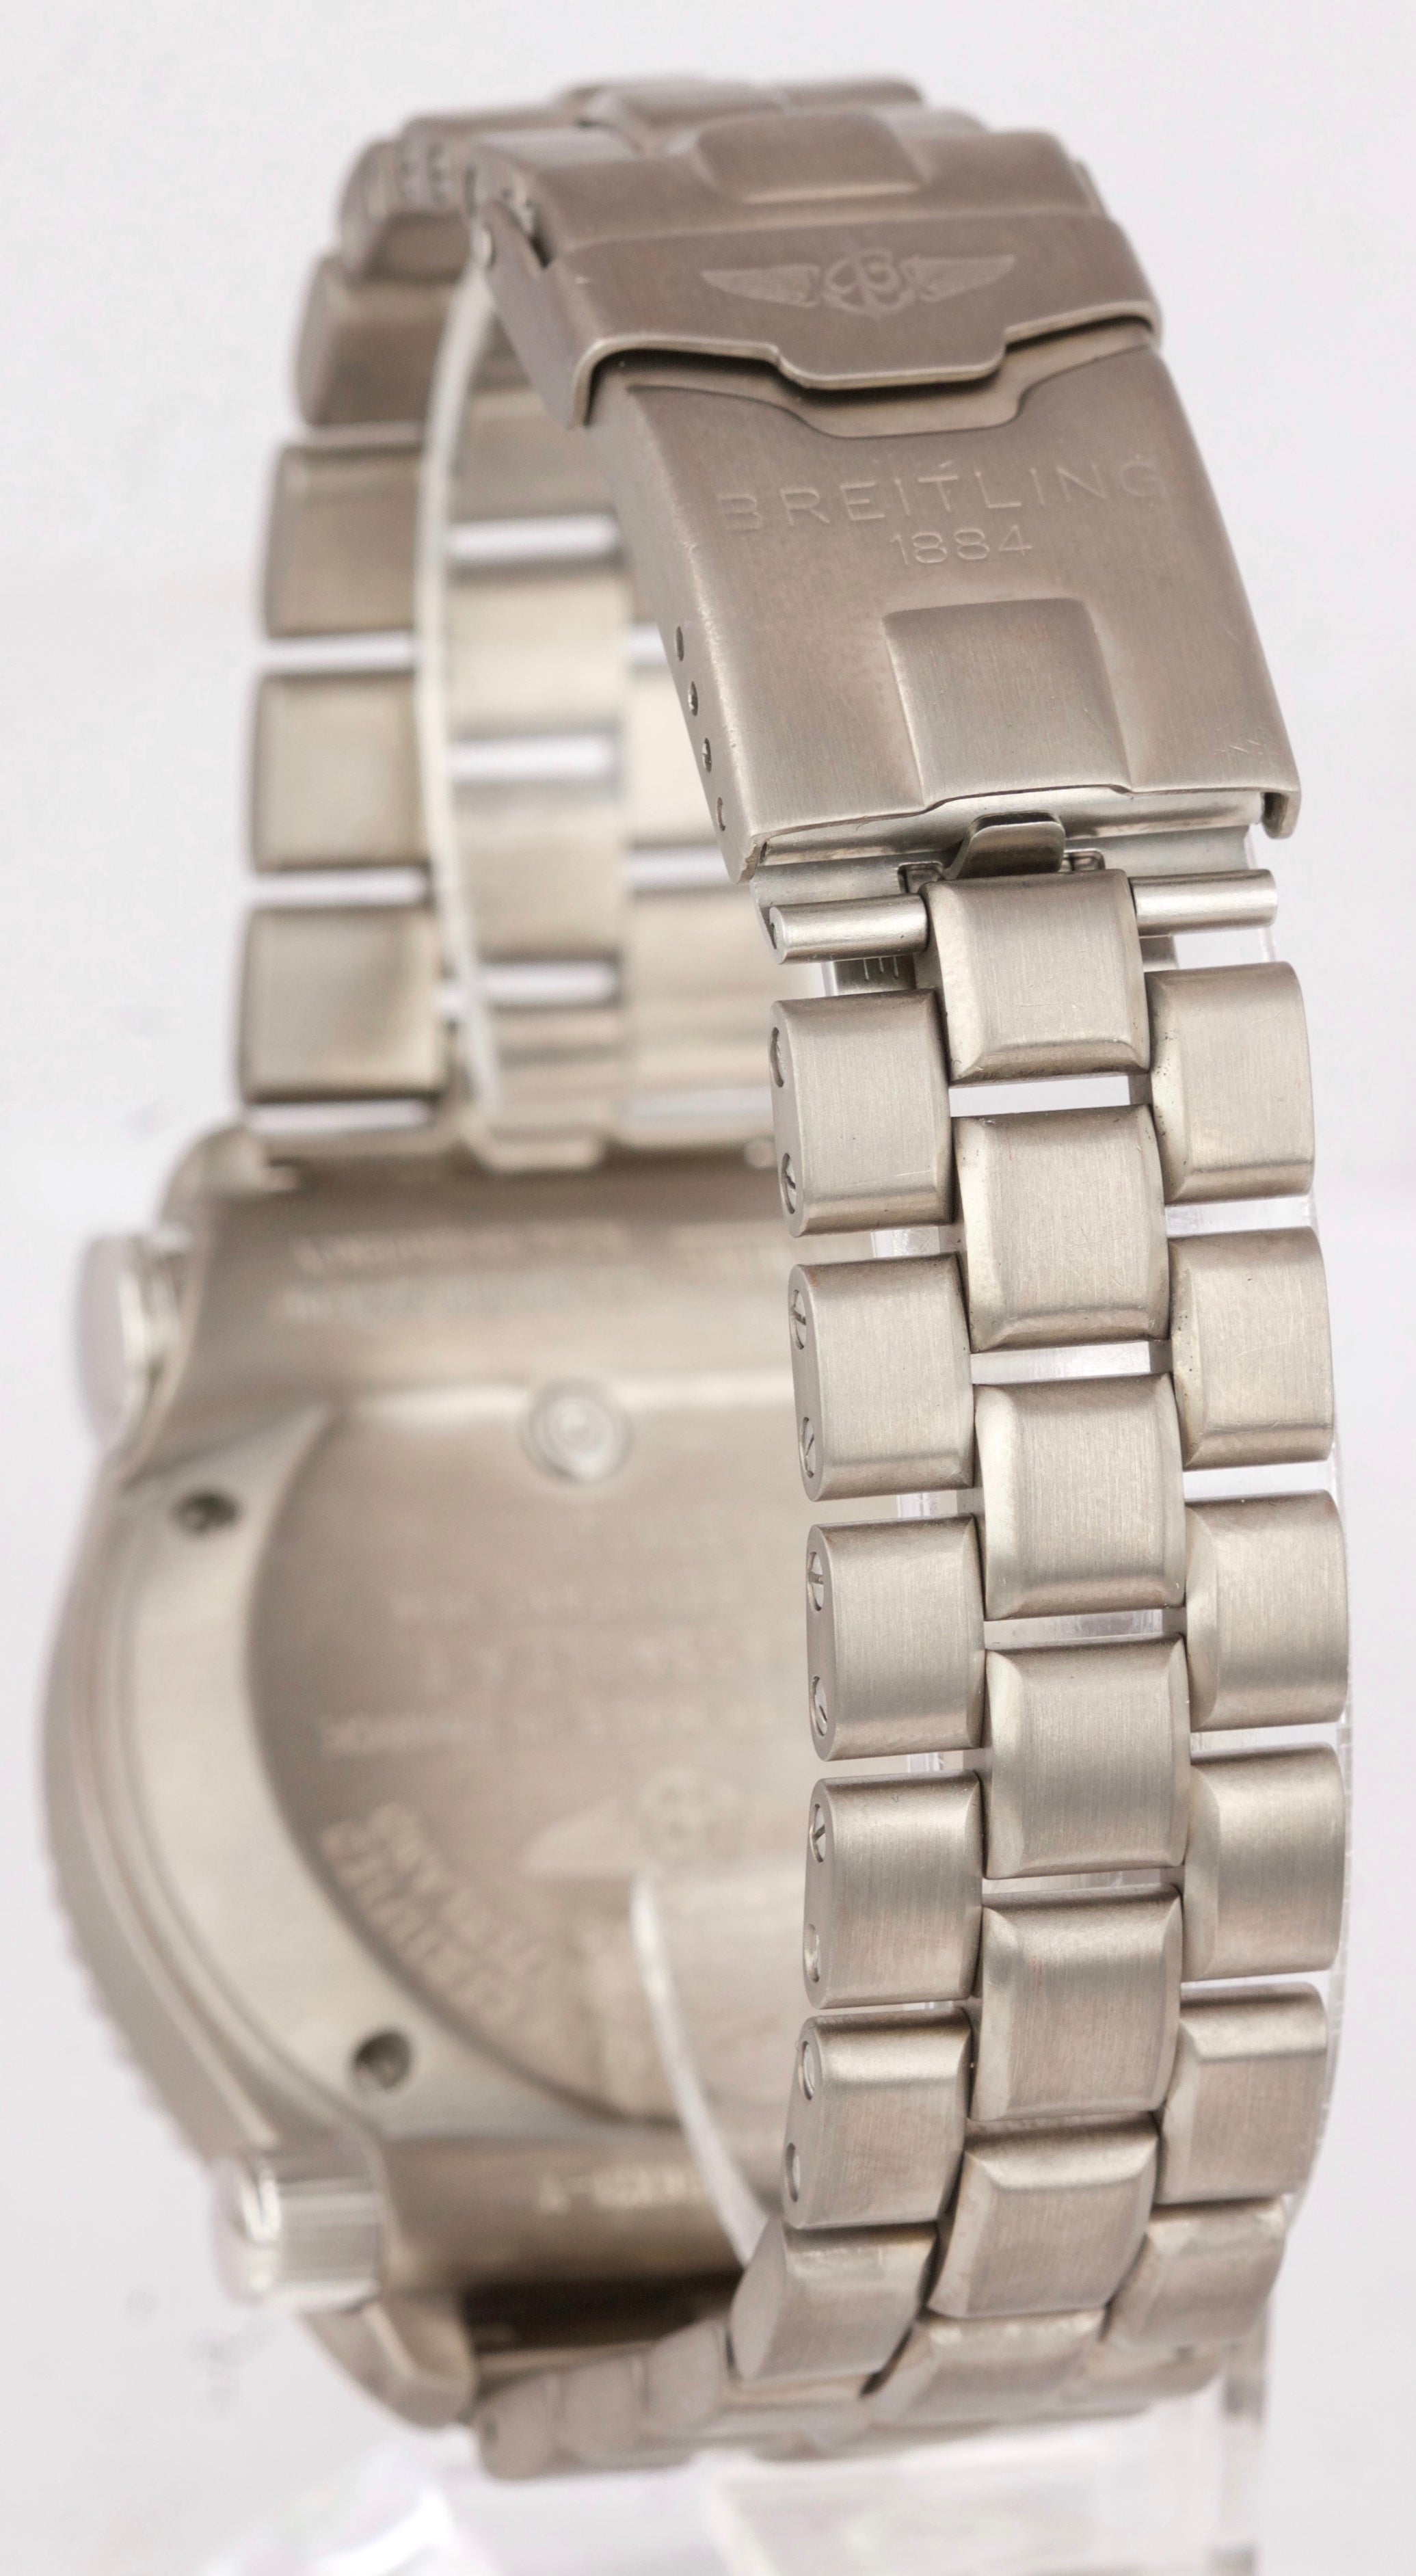 Men's Breitling Emergency Mission Titanium E56121 BLUE 43mm Quartz Watch E56321